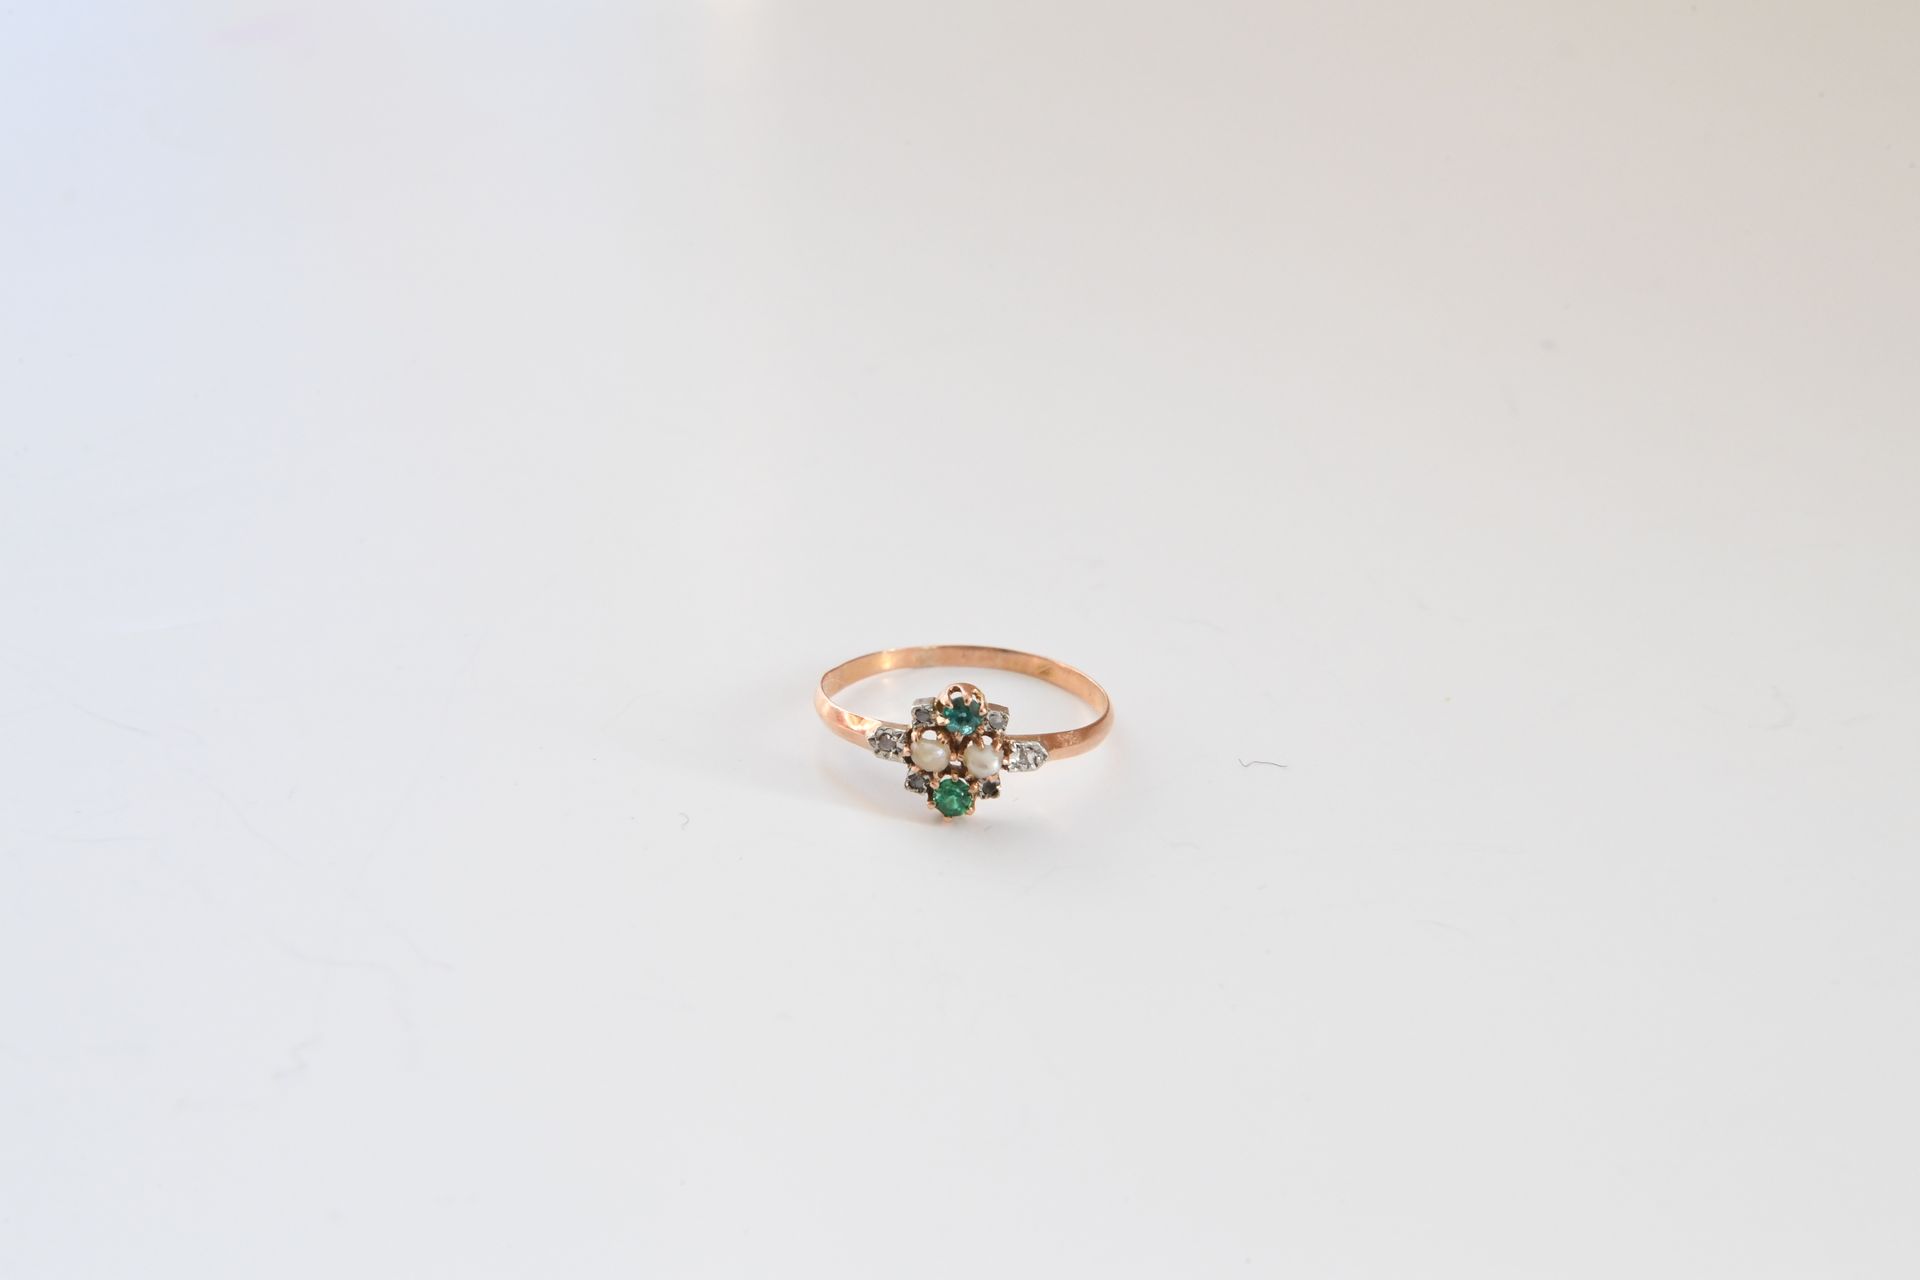 Null 美丽的19世纪黄金戒指750°°°°，镶嵌着精美的珍珠、玫瑰式切割钻石和绿色宝石。TDD：54。毛重：1.2克。